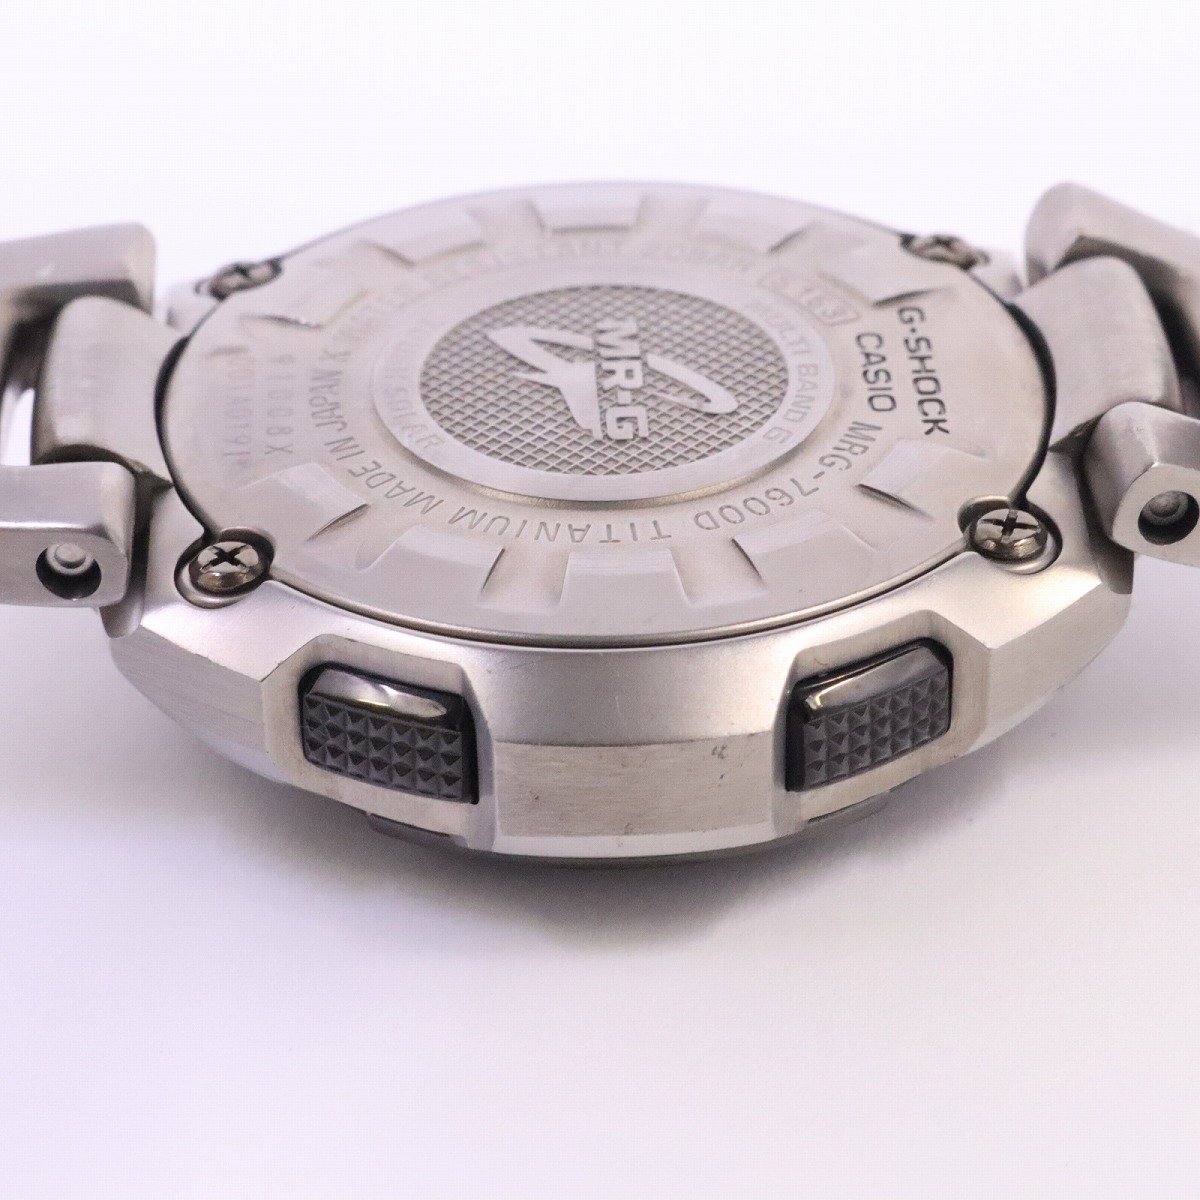  Casio G-SHOCK MR-G solar radio wave hole teji model men's wristwatch titanium grey face MRG-7600D-1BJF[... pawnshop ]